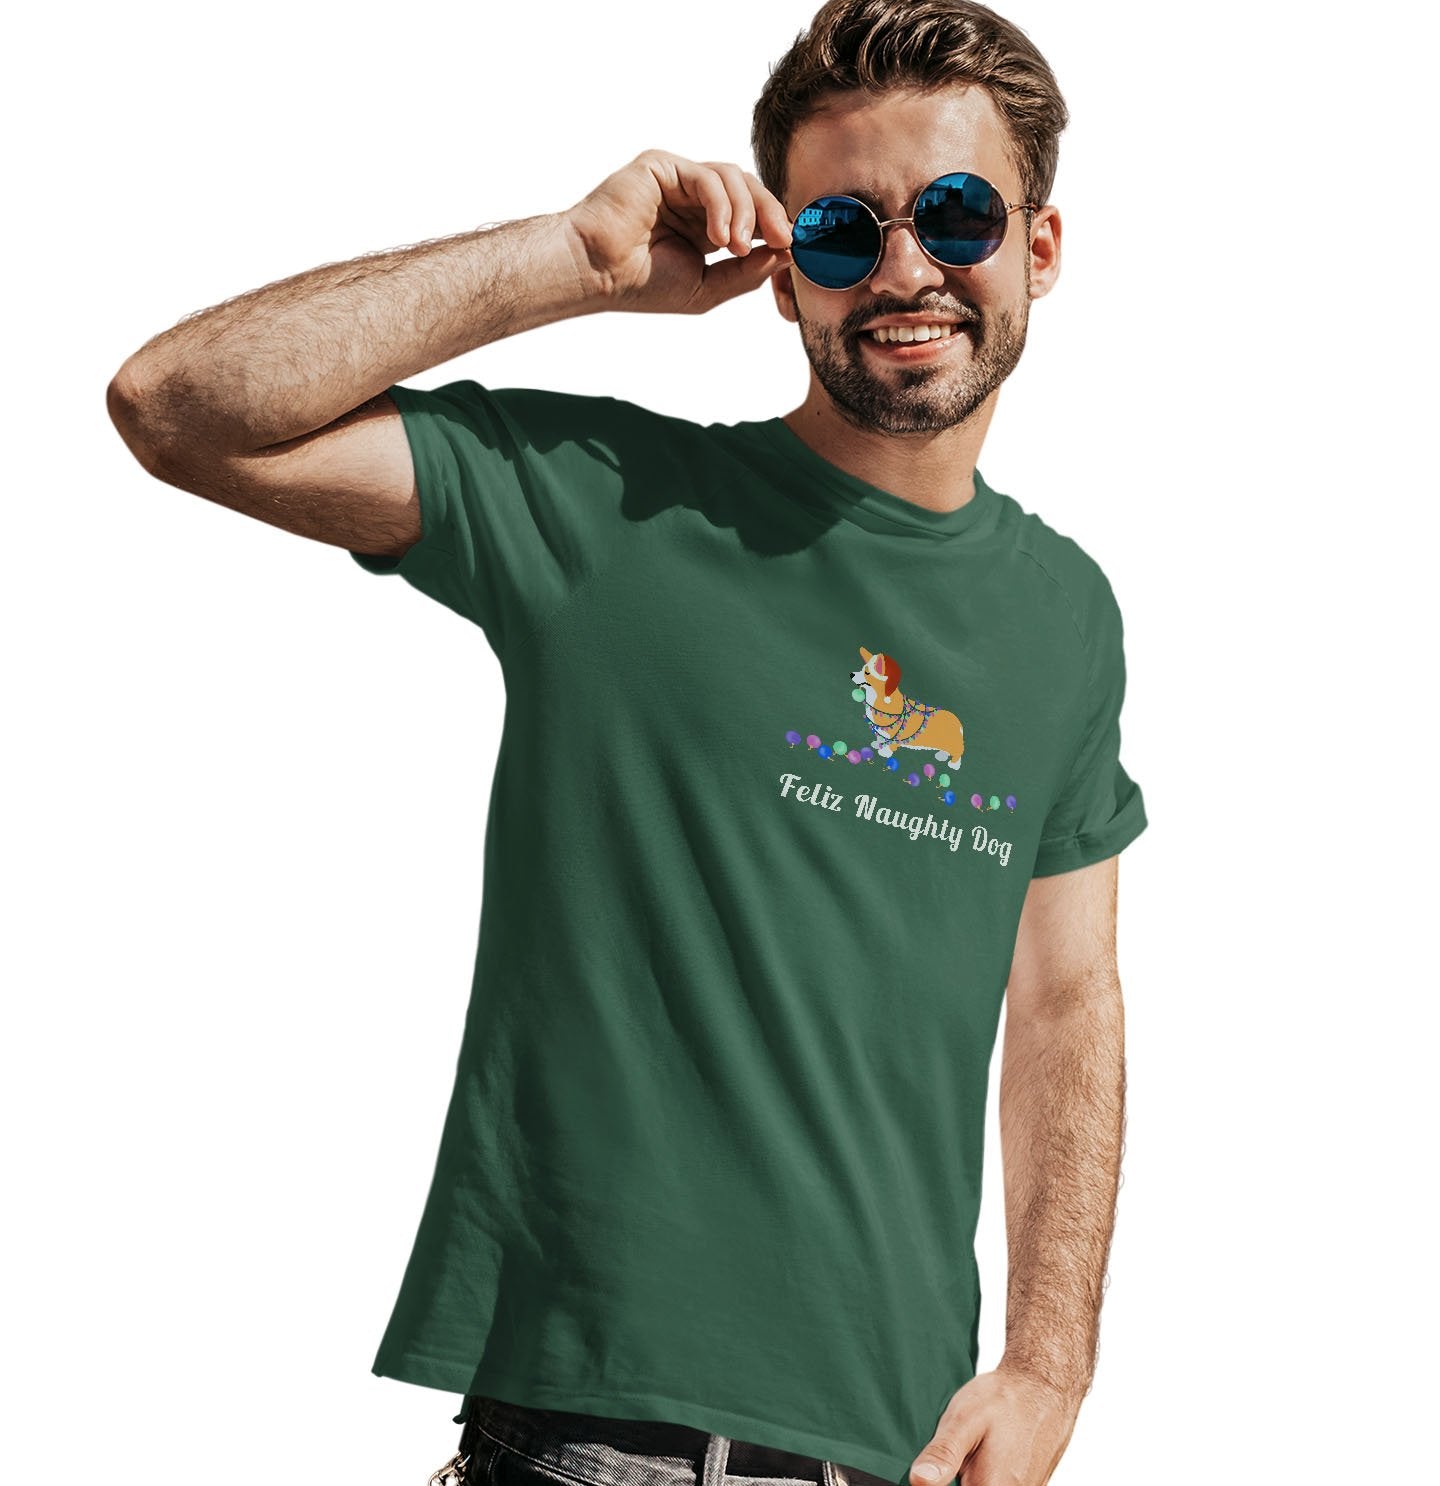 Feliz Naughty Dog Corgi - Adult Unisex T-Shirt